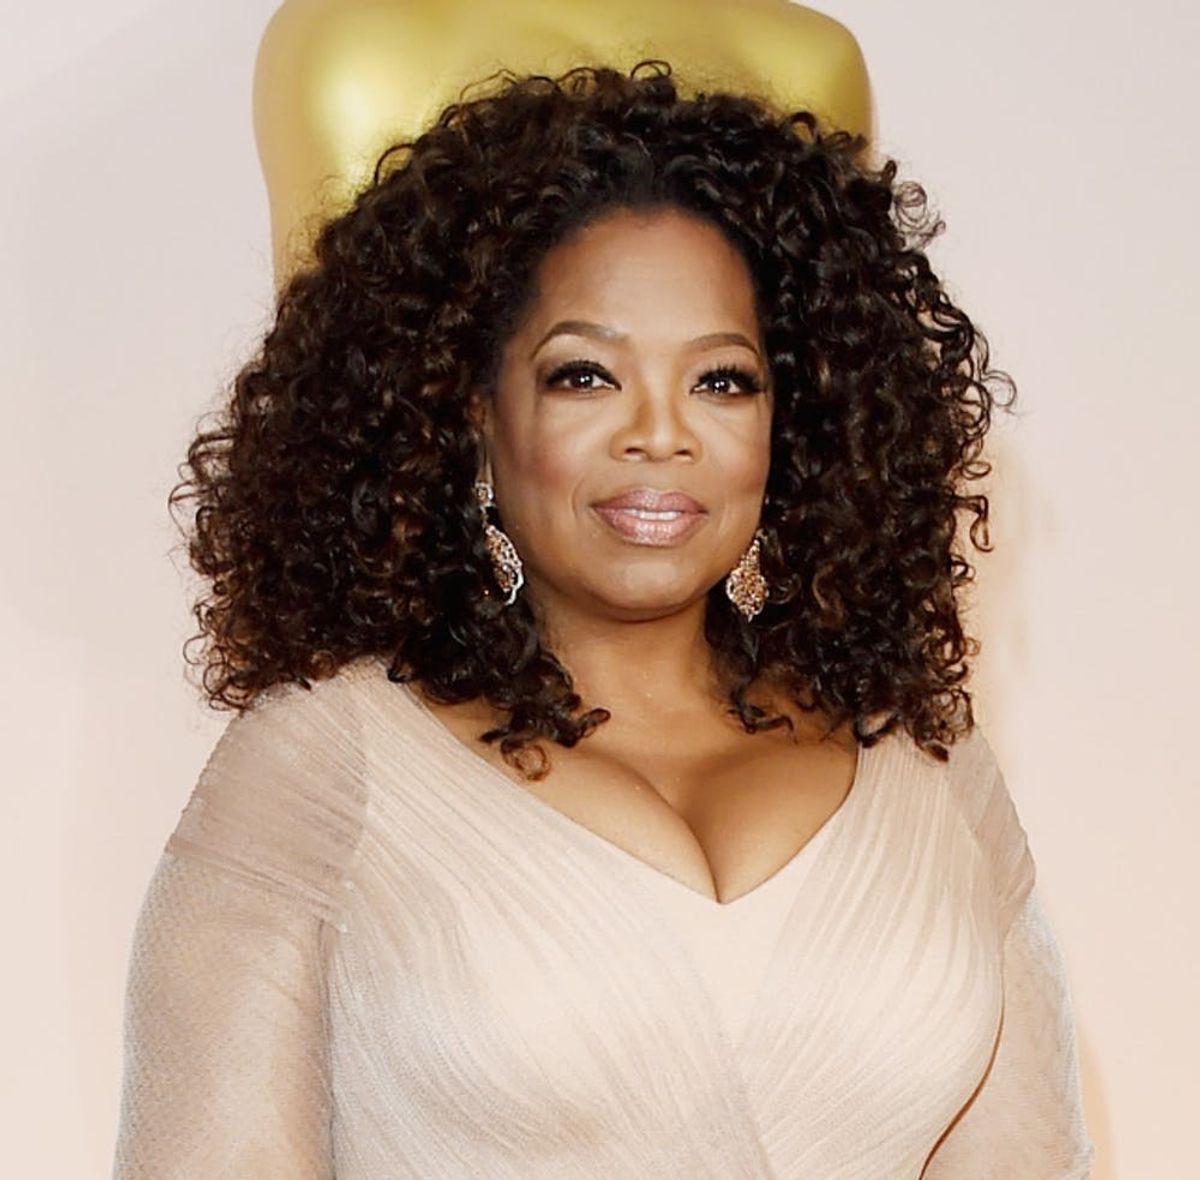 Oprah Winfrey Made $12 Million by Tweeting About Bread